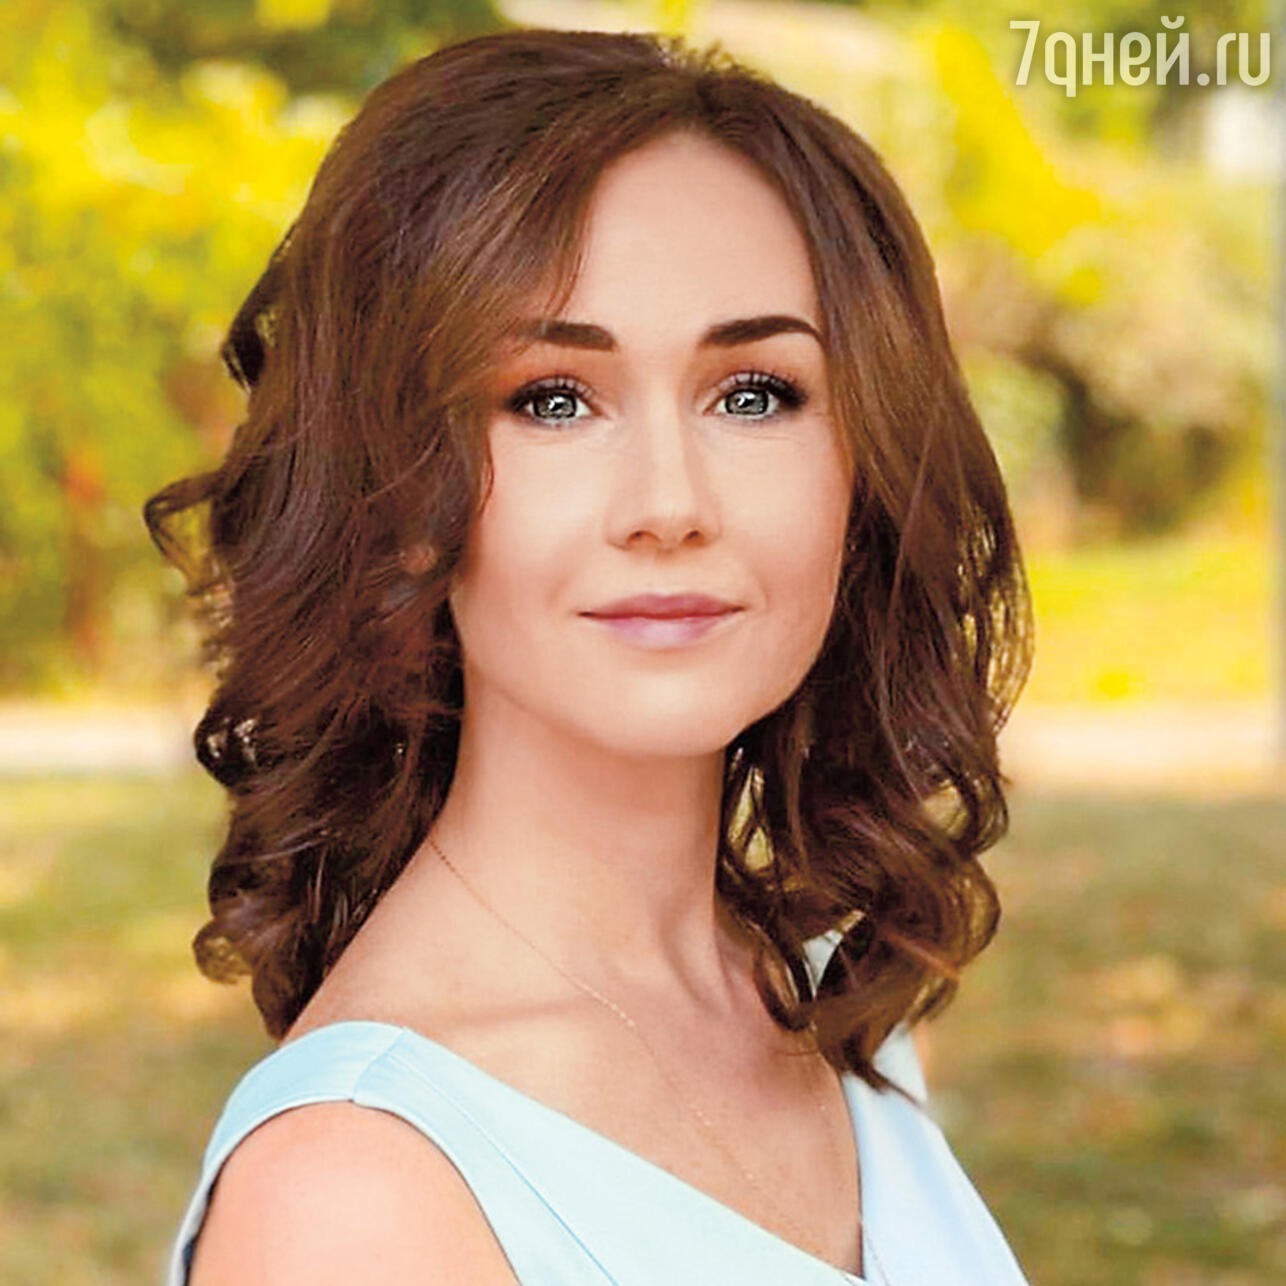 Алина Сергеева: «За неделю я легко худею на 4 килограмма» - 7Дней.ру